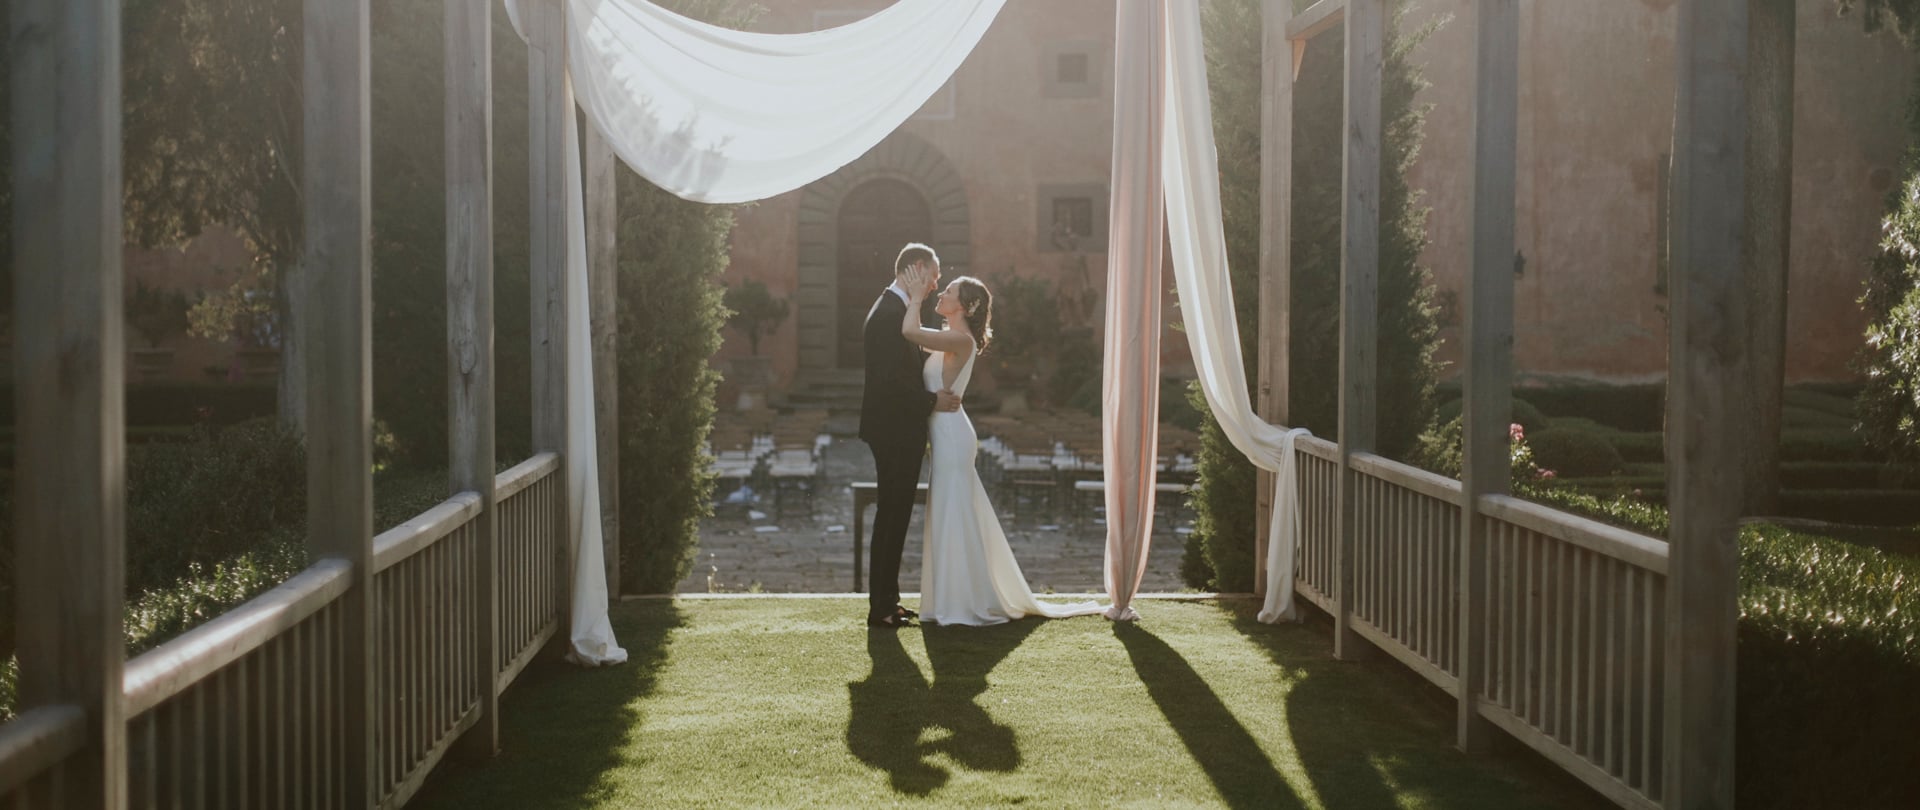 Celeste & Martin Wedding Video Filmed at Tuscany, Italy